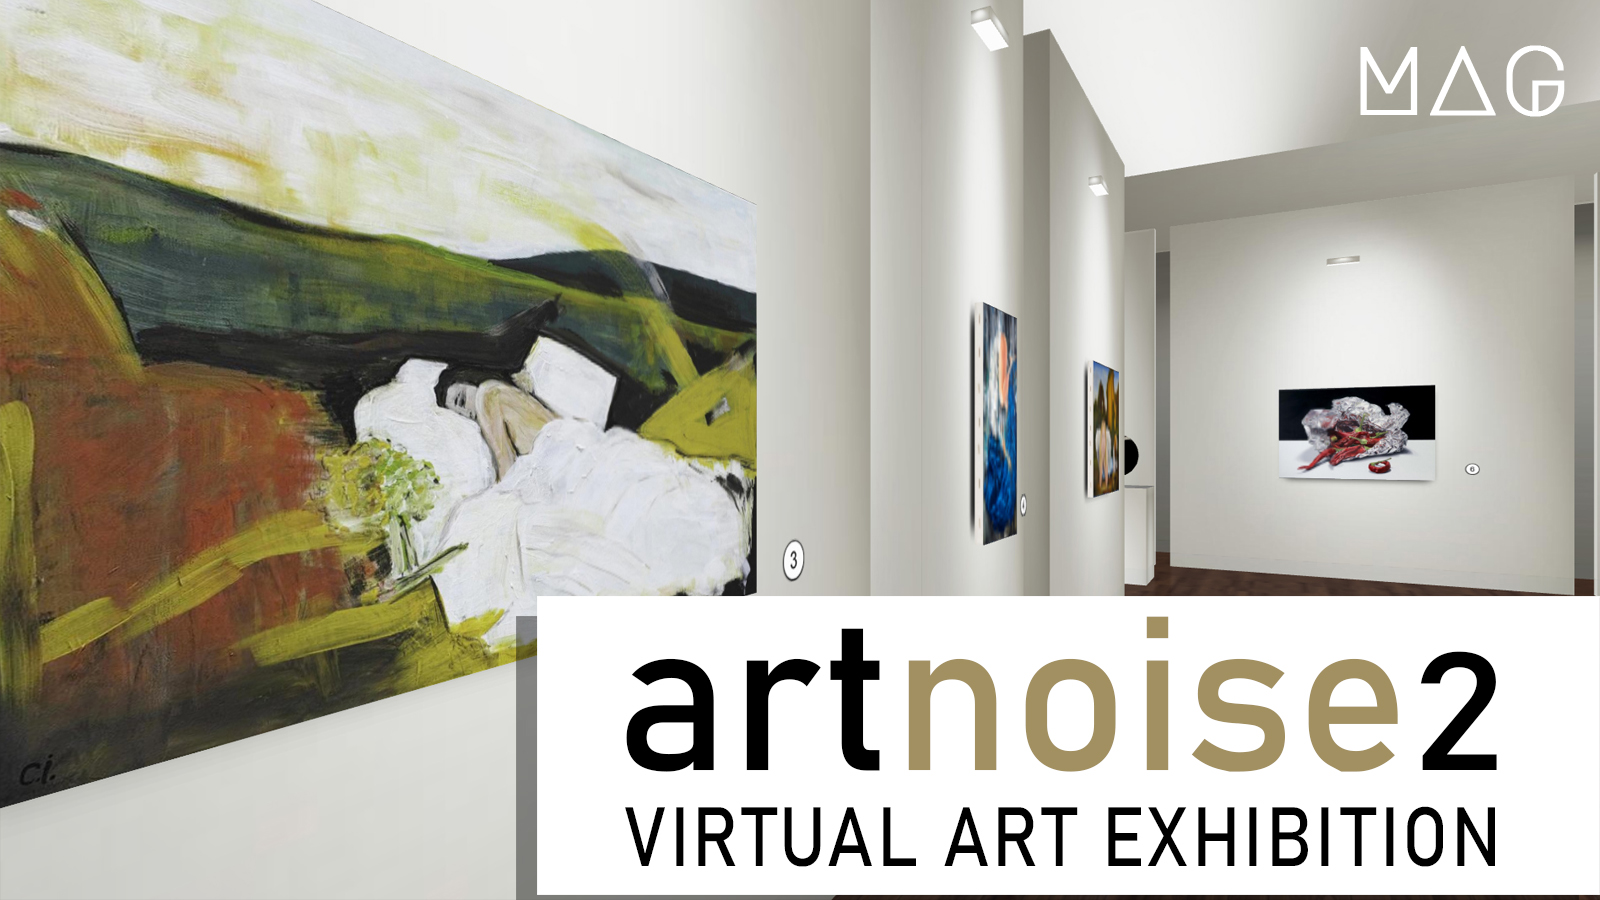 Virtual Art Gallery - Make Art Gallery NEWS